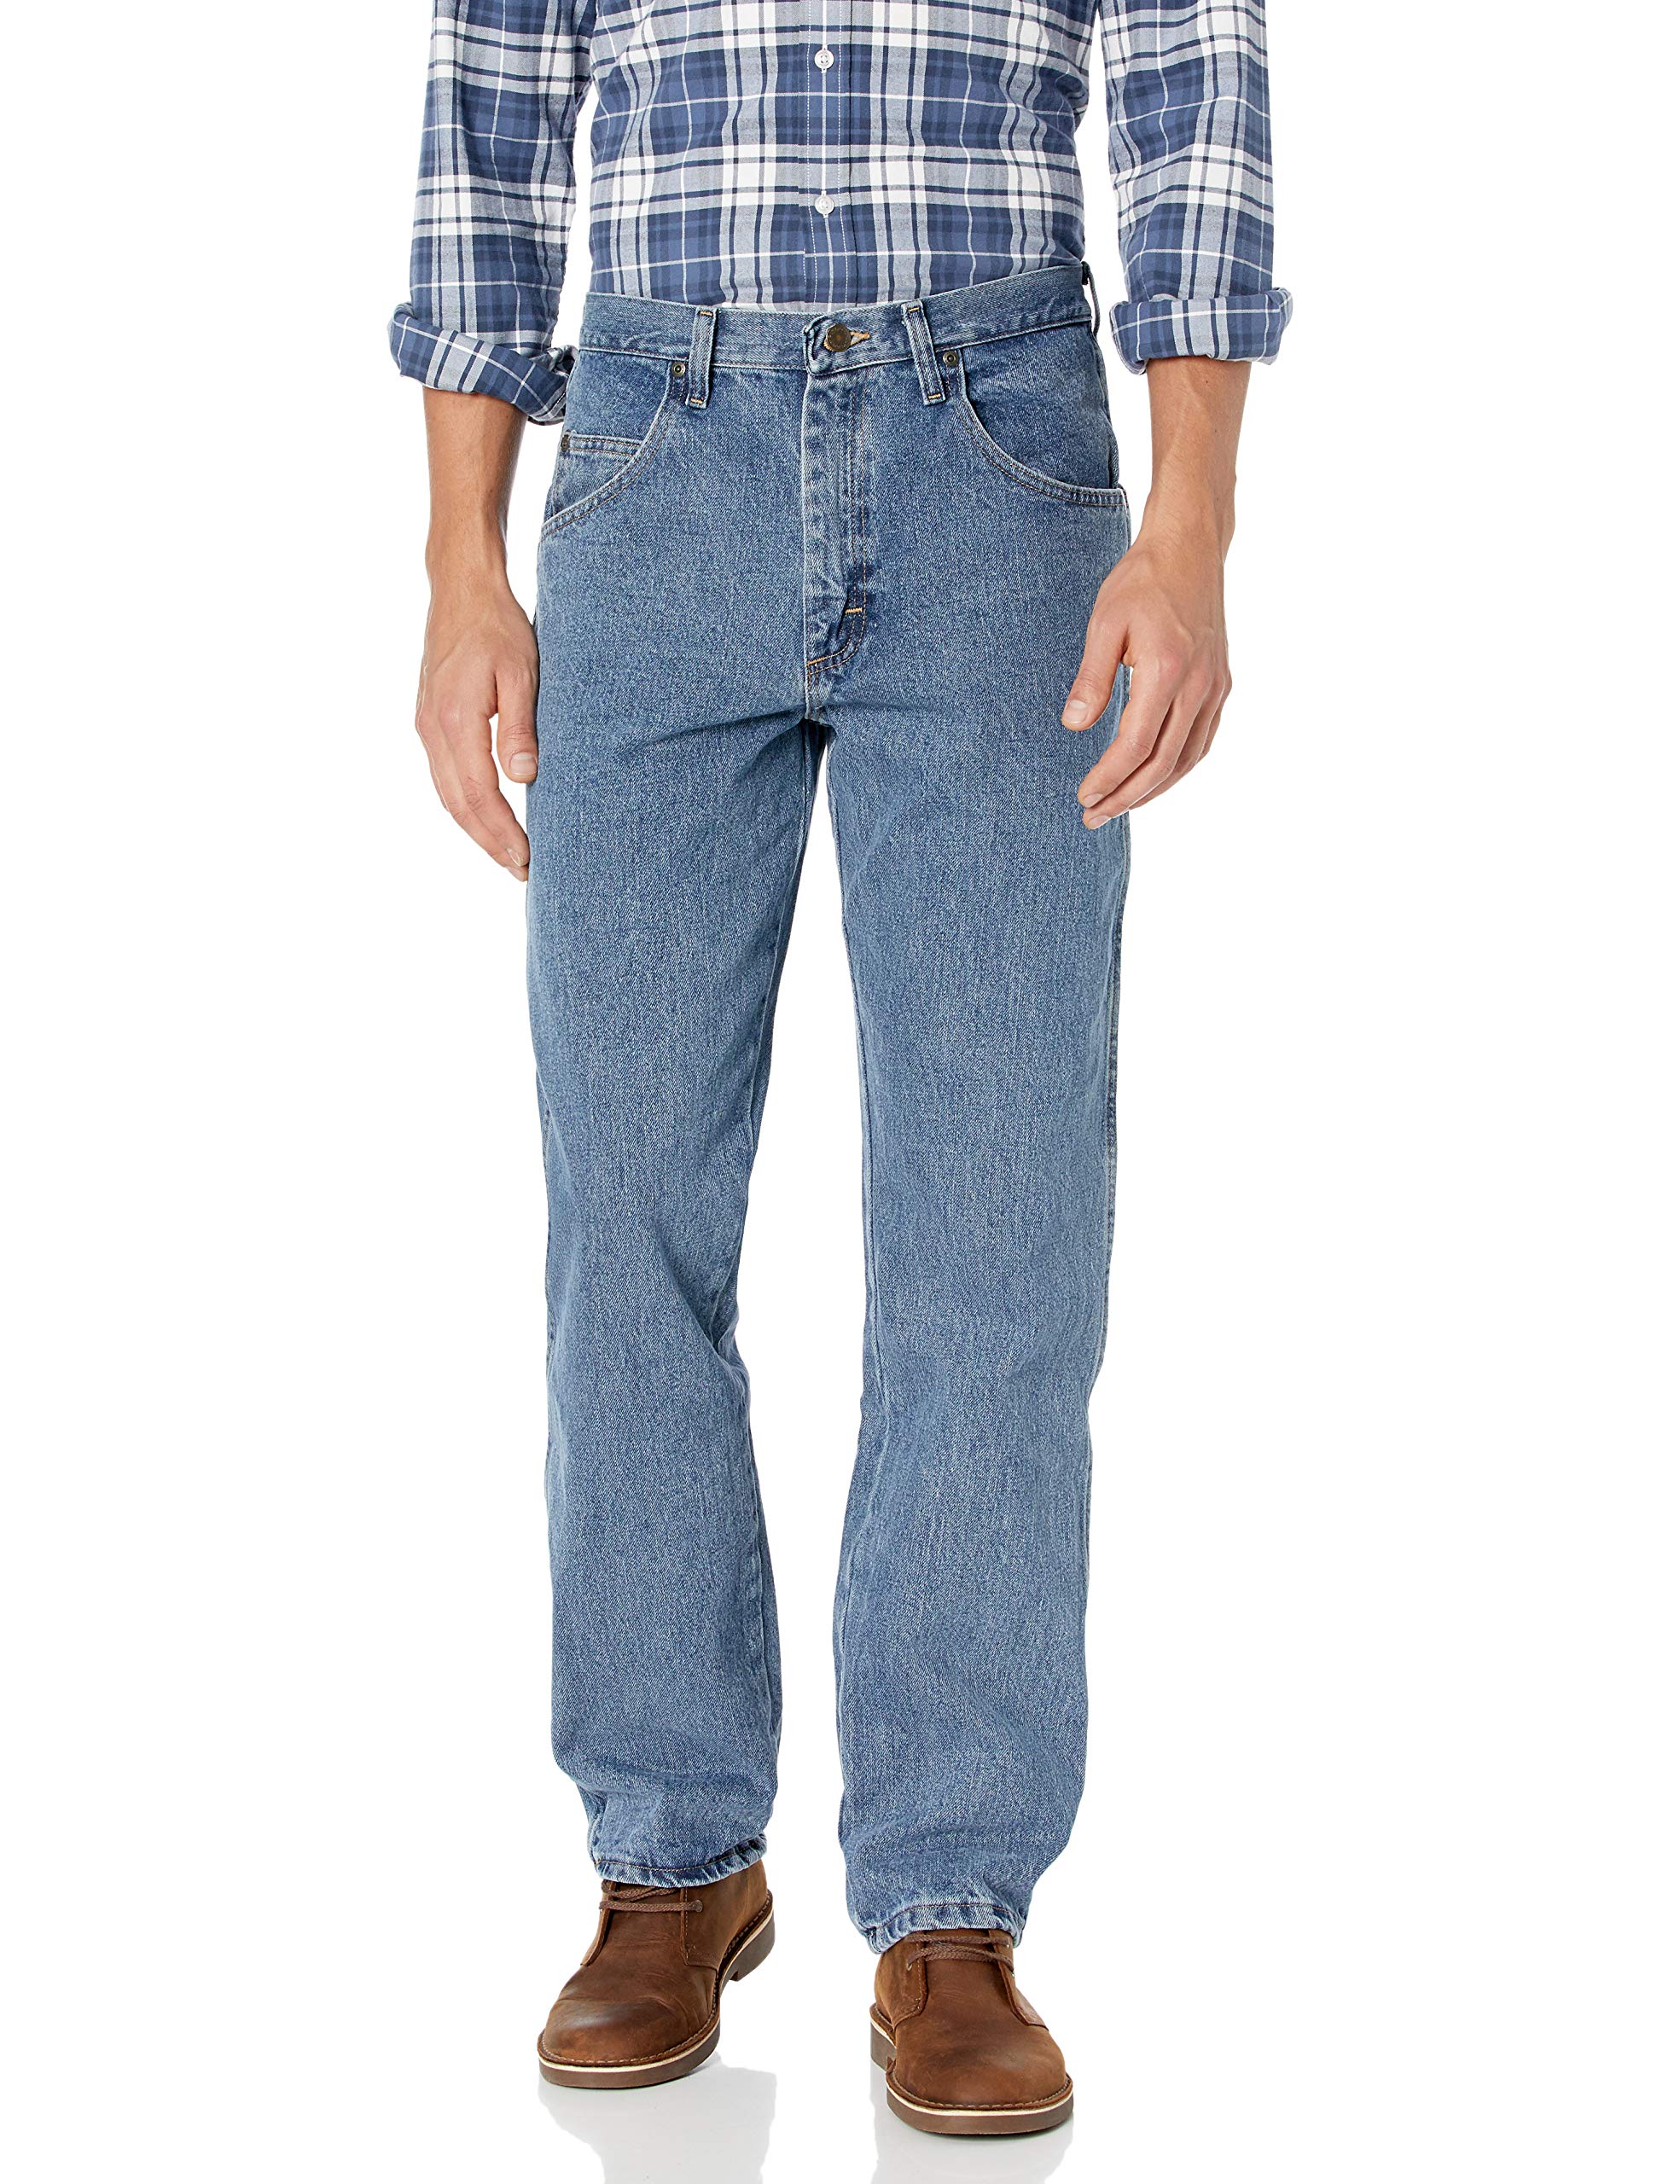 Mua Wrangler Men's Relaxed Fit Jean trên Amazon Mỹ chính hãng 2023 |  Giaonhan247